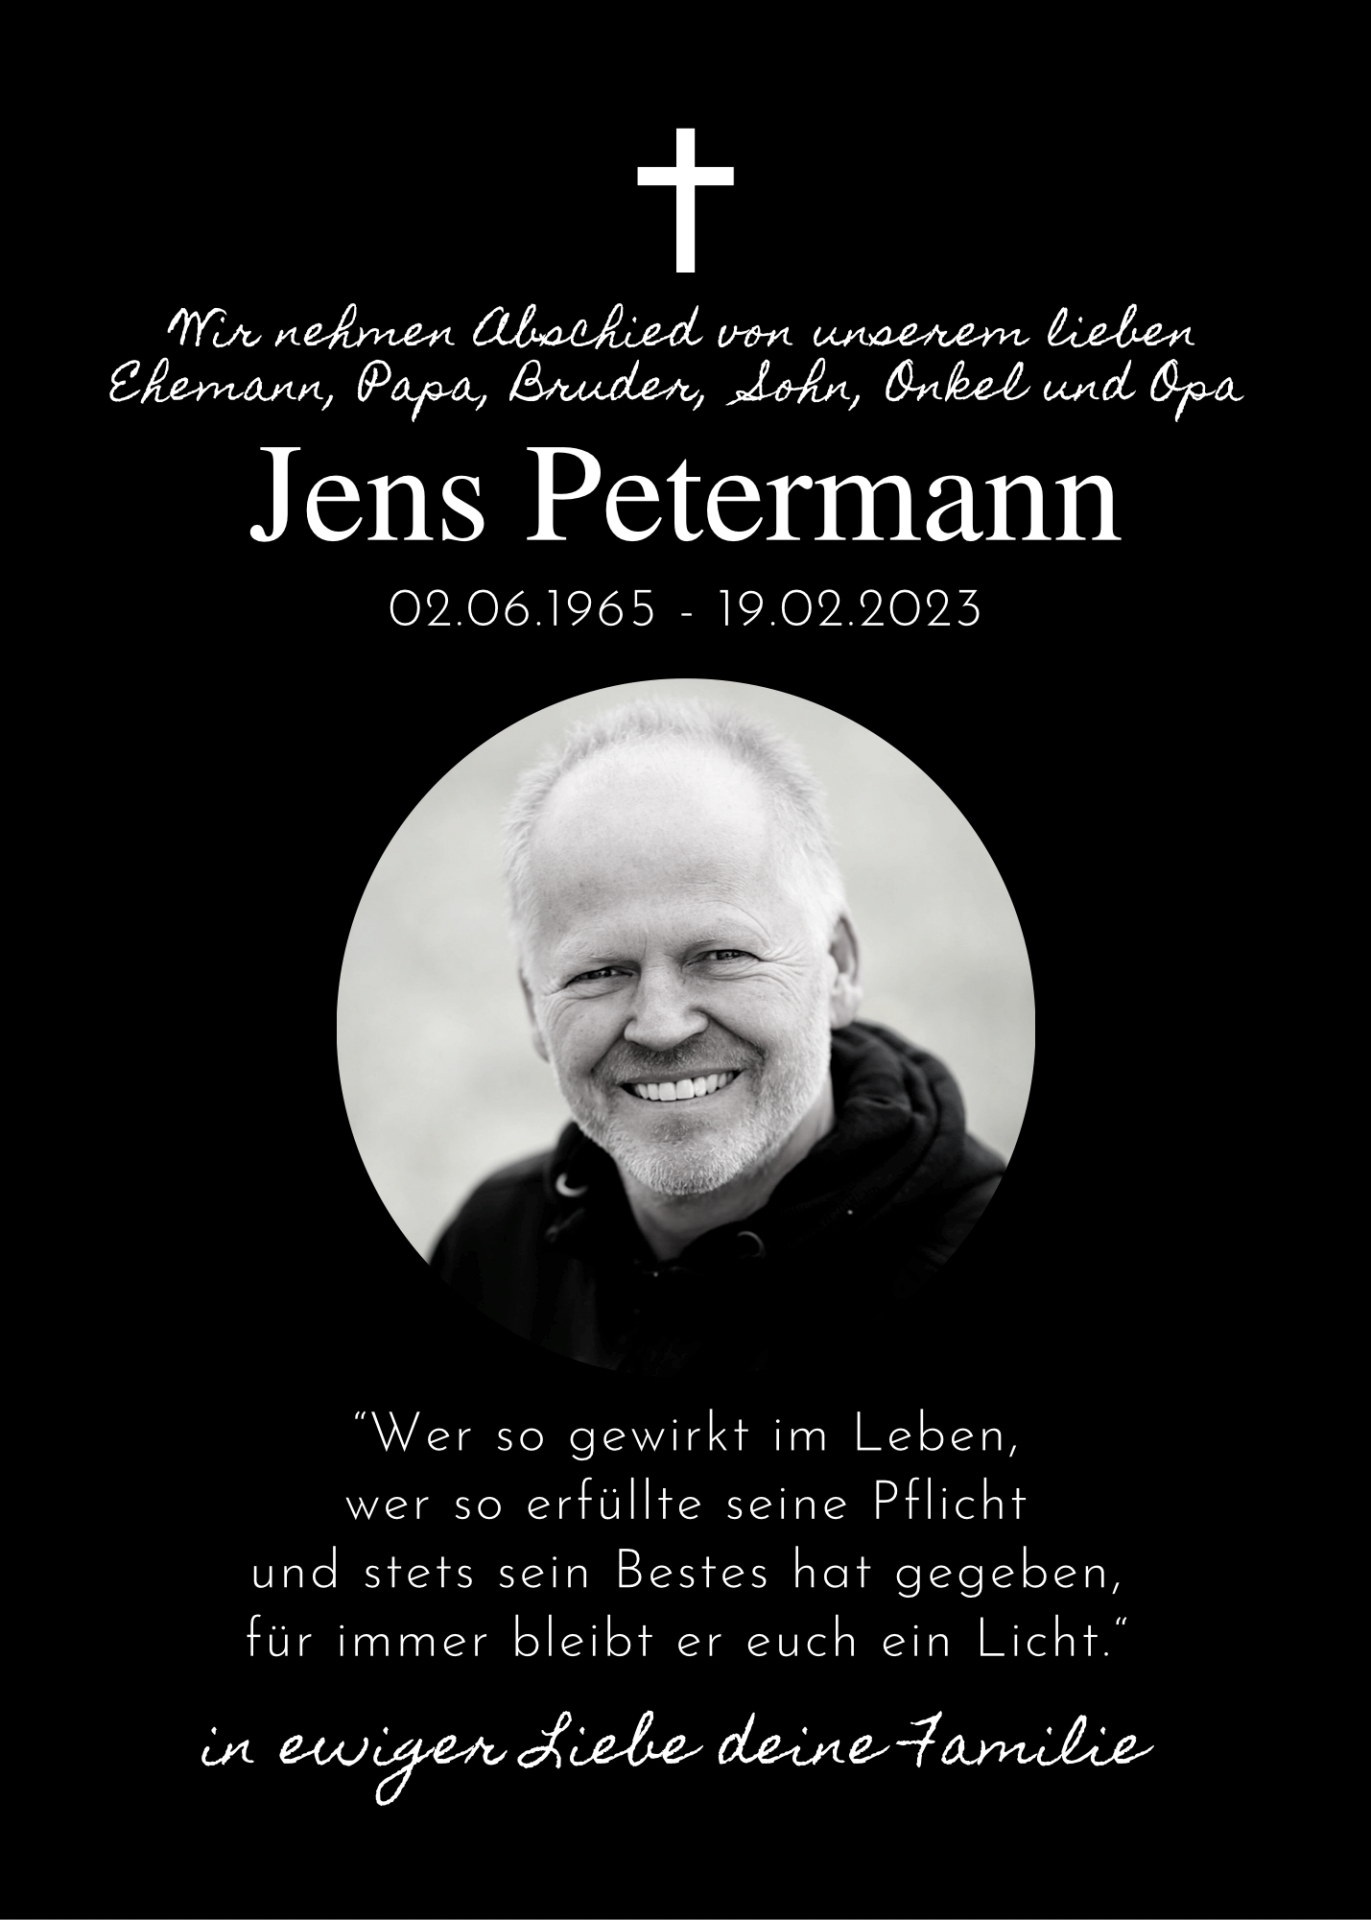 Jens Petermann